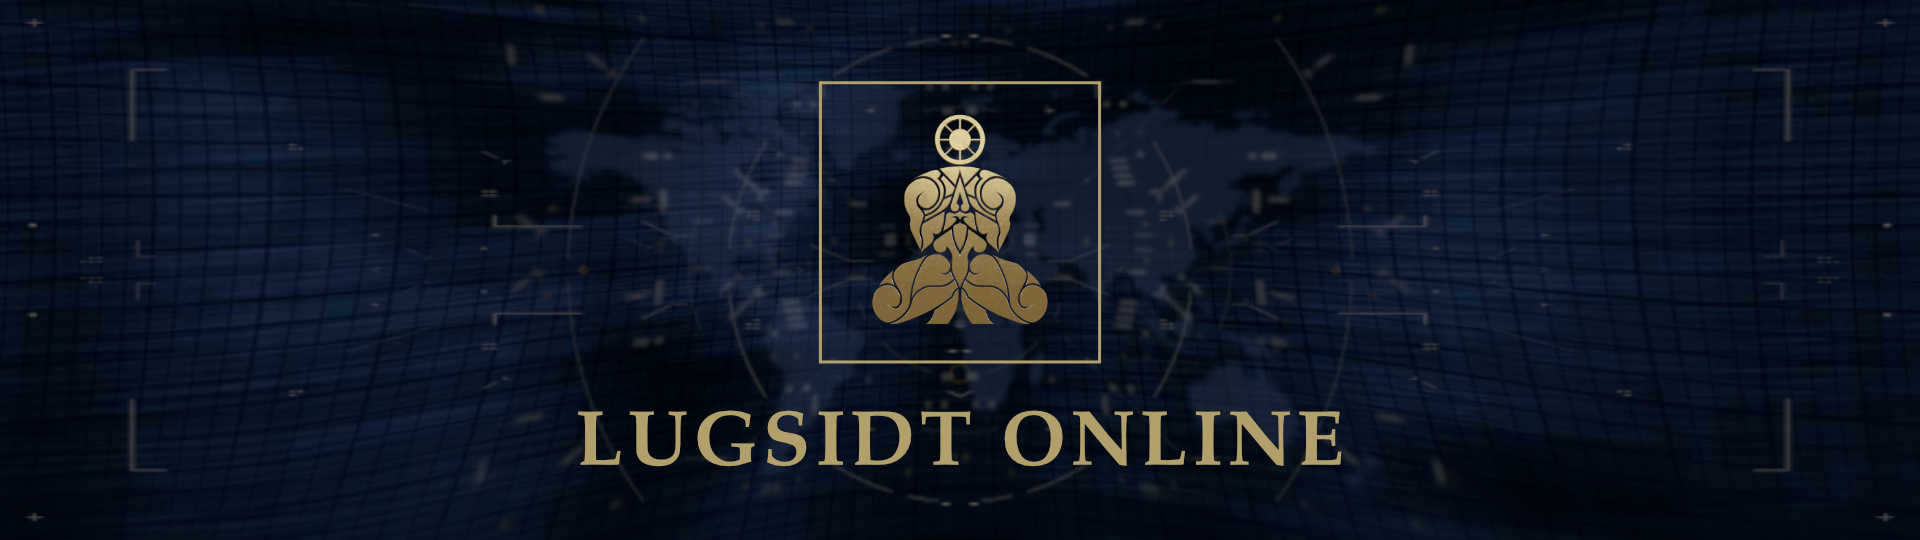 Lugsidt online banner